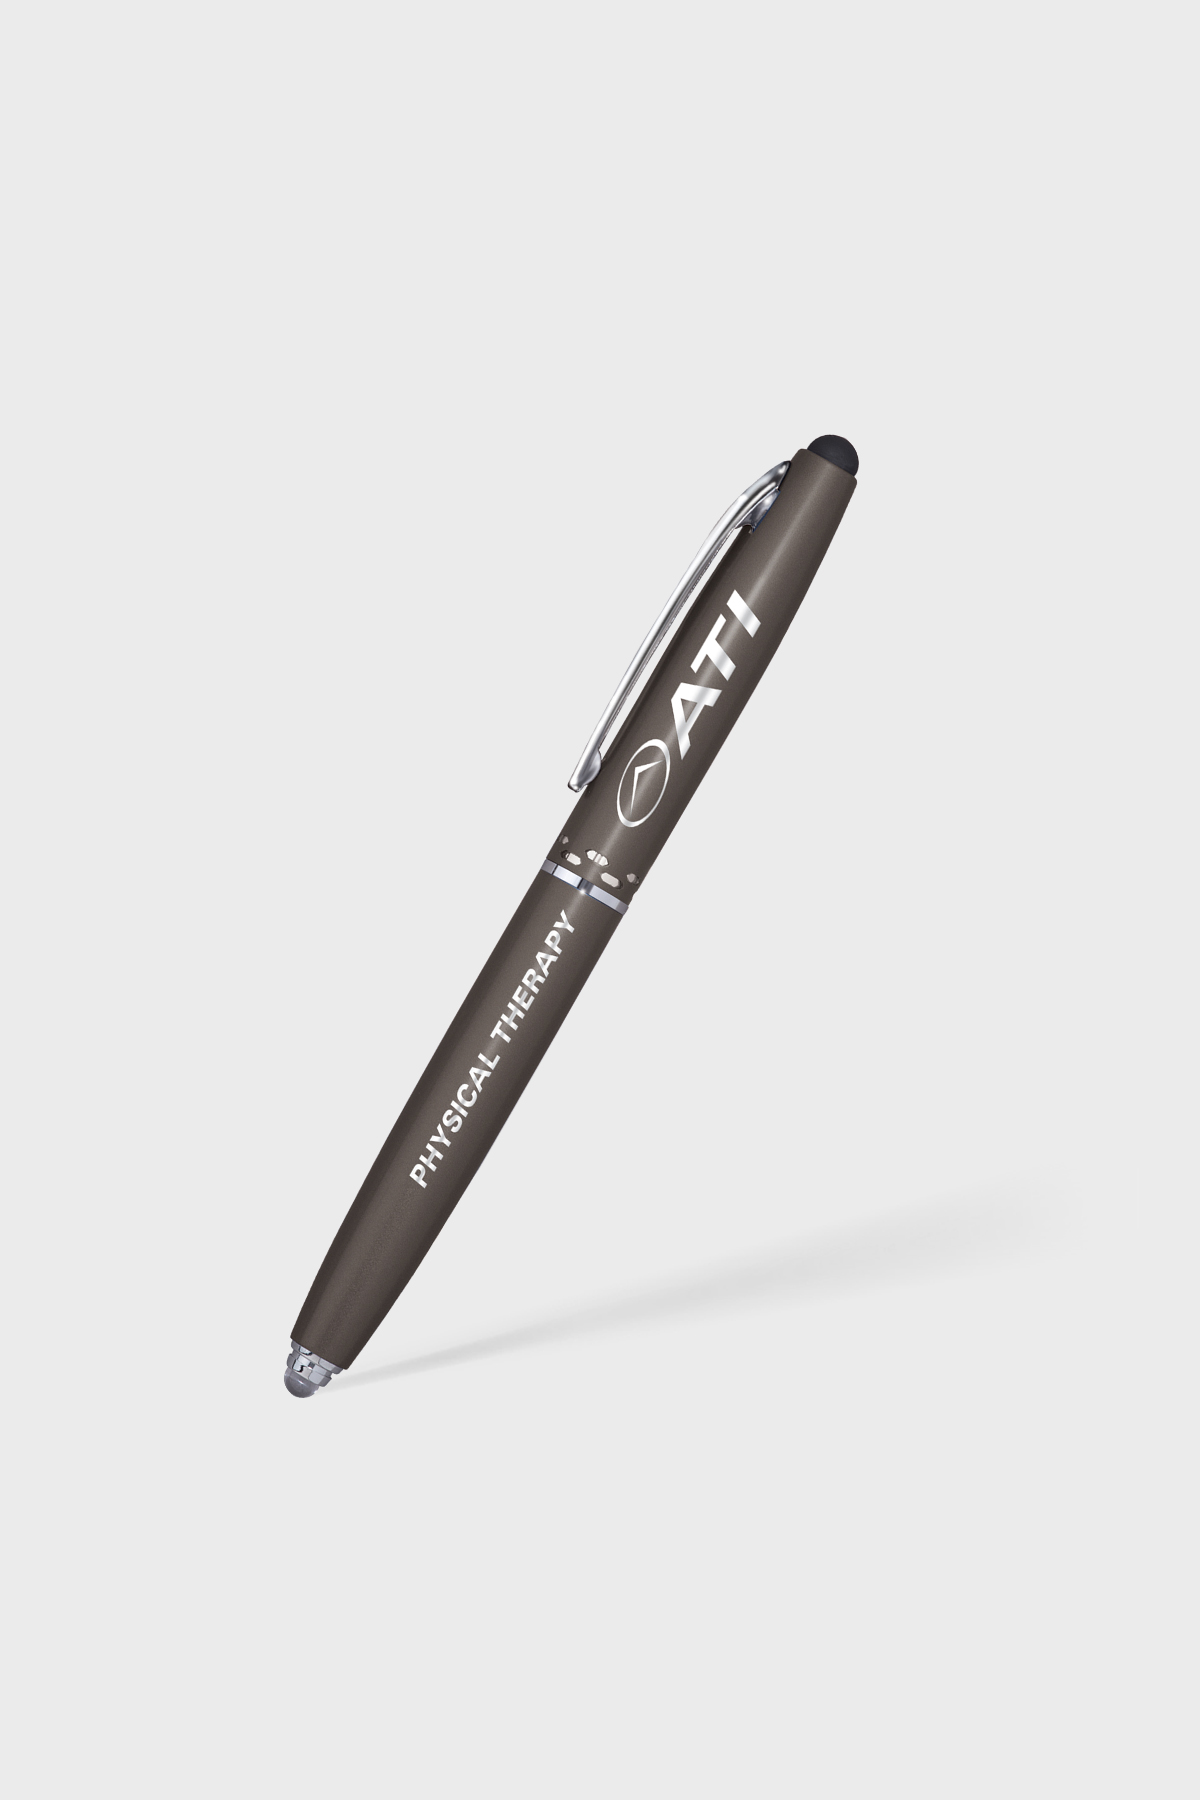 Porte crayon triple (support 3 stylos)